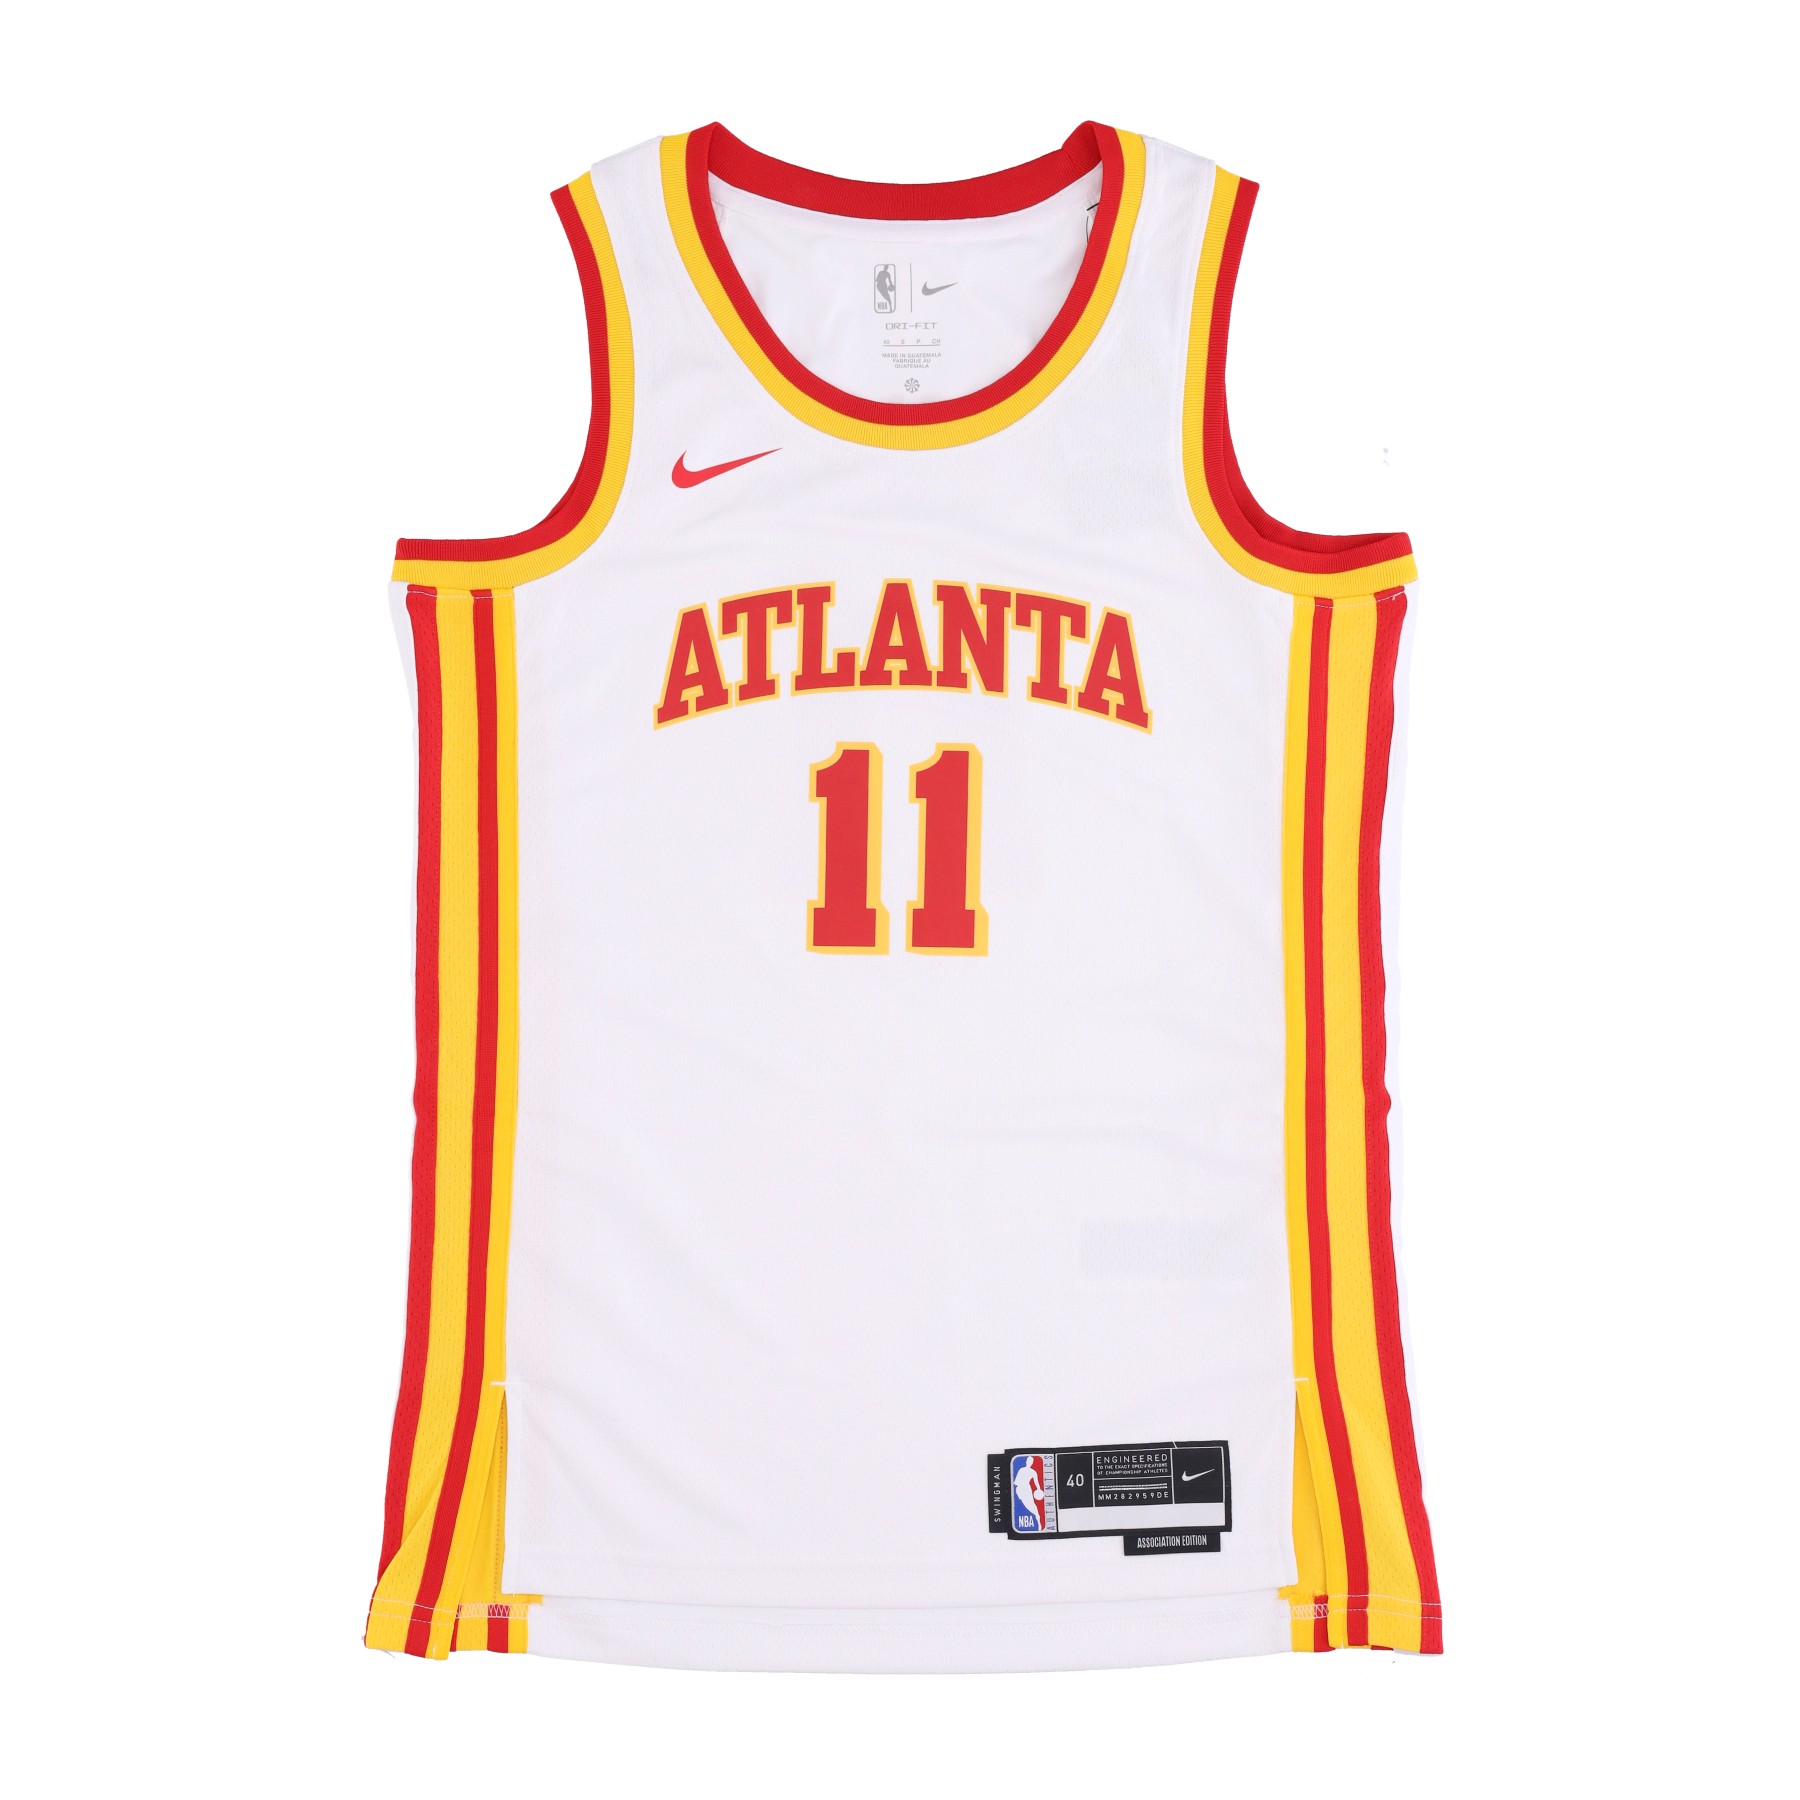 Nike NBA Trae Young Atlanta Hawks Dri-Fit Jersey Black/Orange